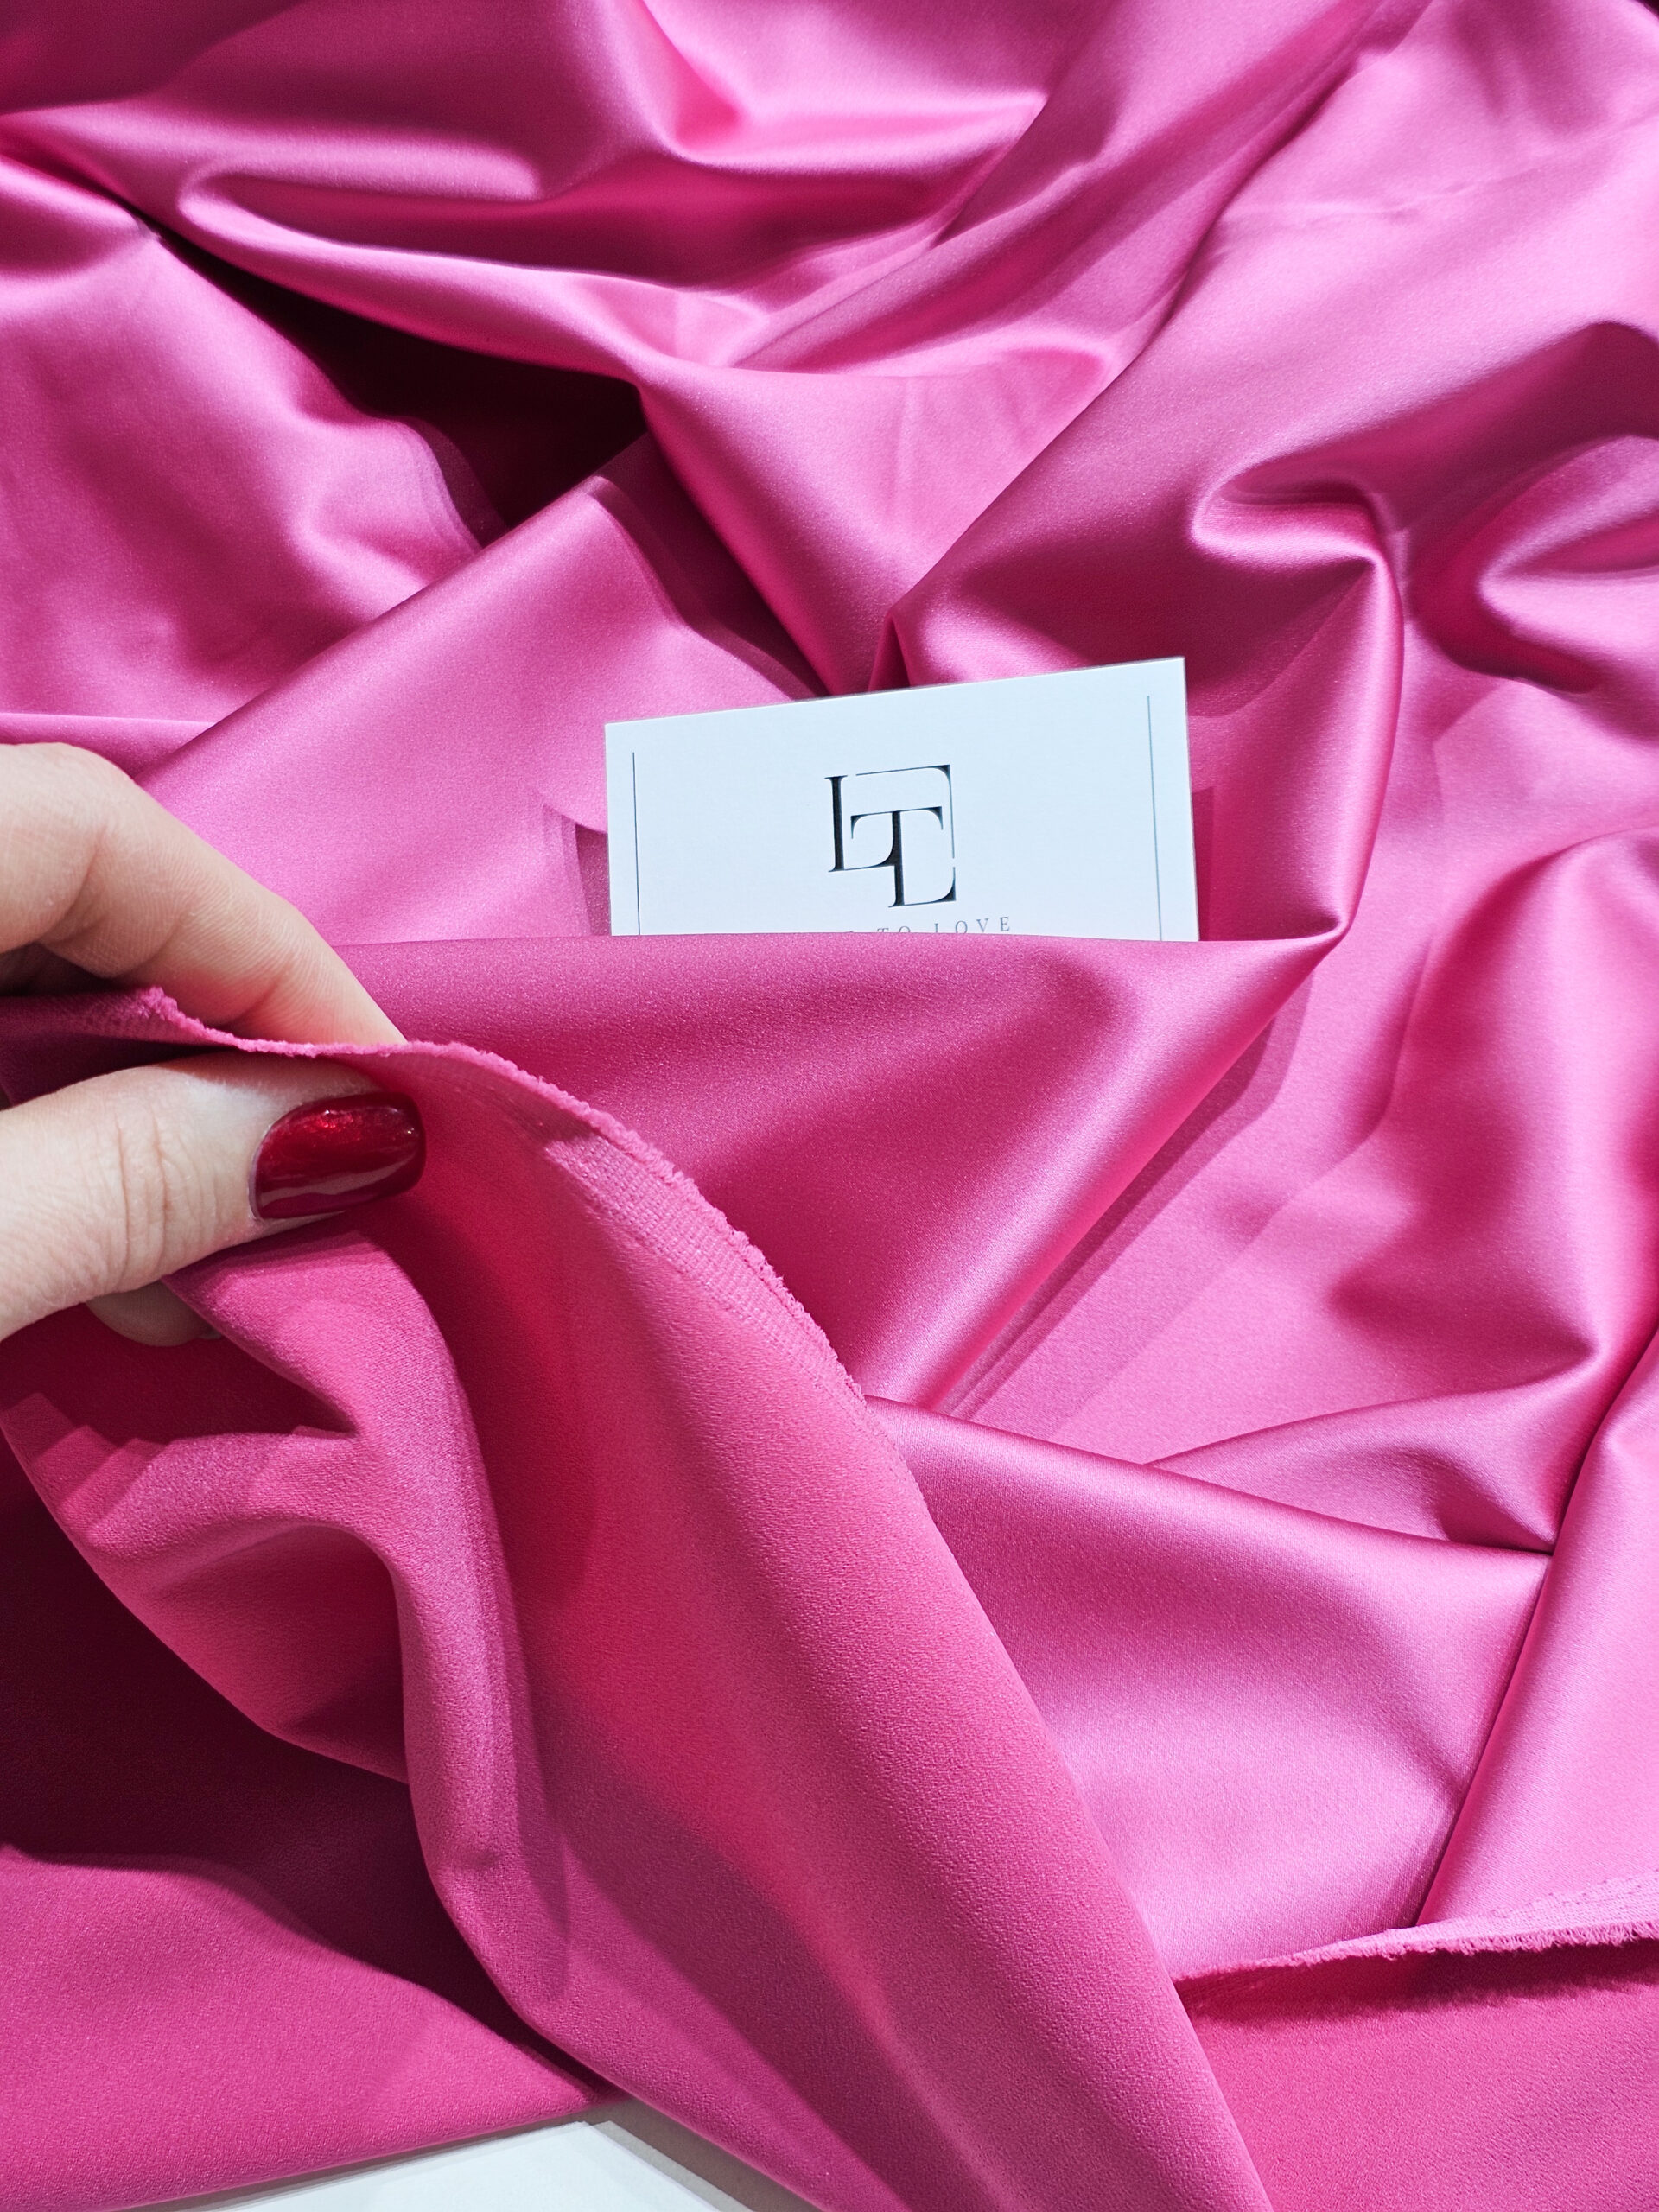 Pink elastic stretch satin fabric